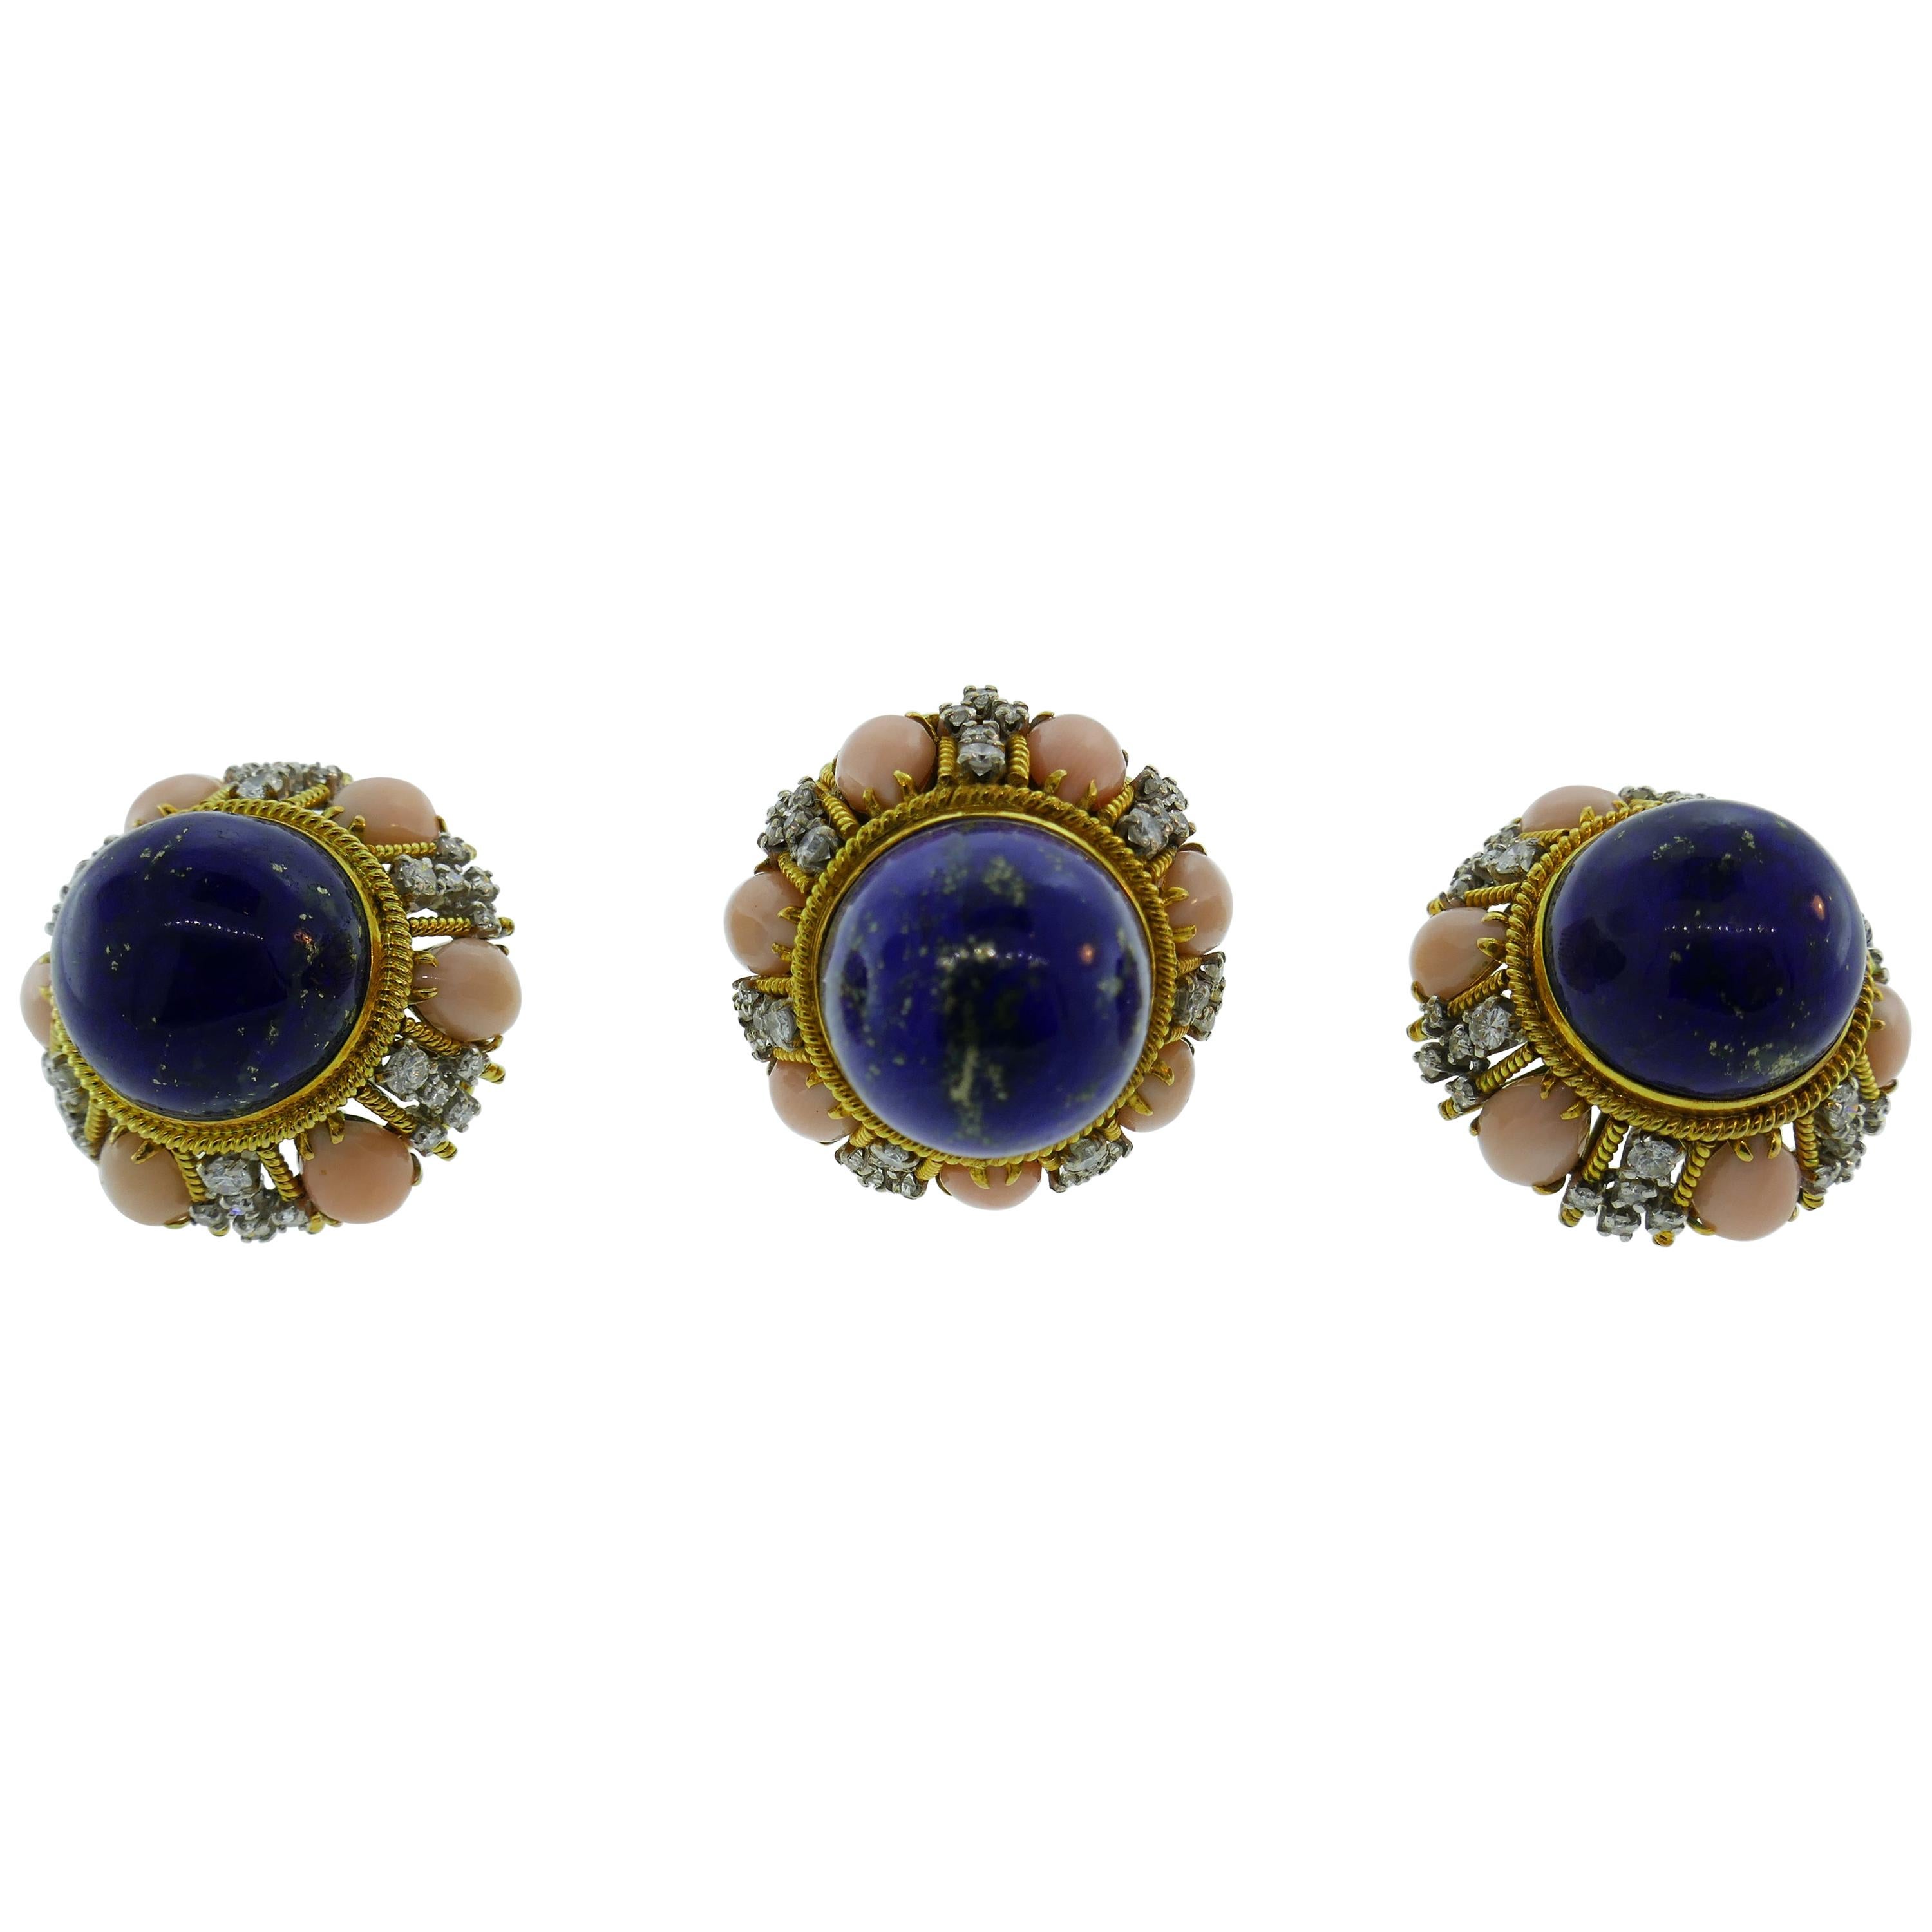 Vintage 18K Yellow Gold, Lapis, Coral & Diamond Ring & Earrings Set circa 1960s